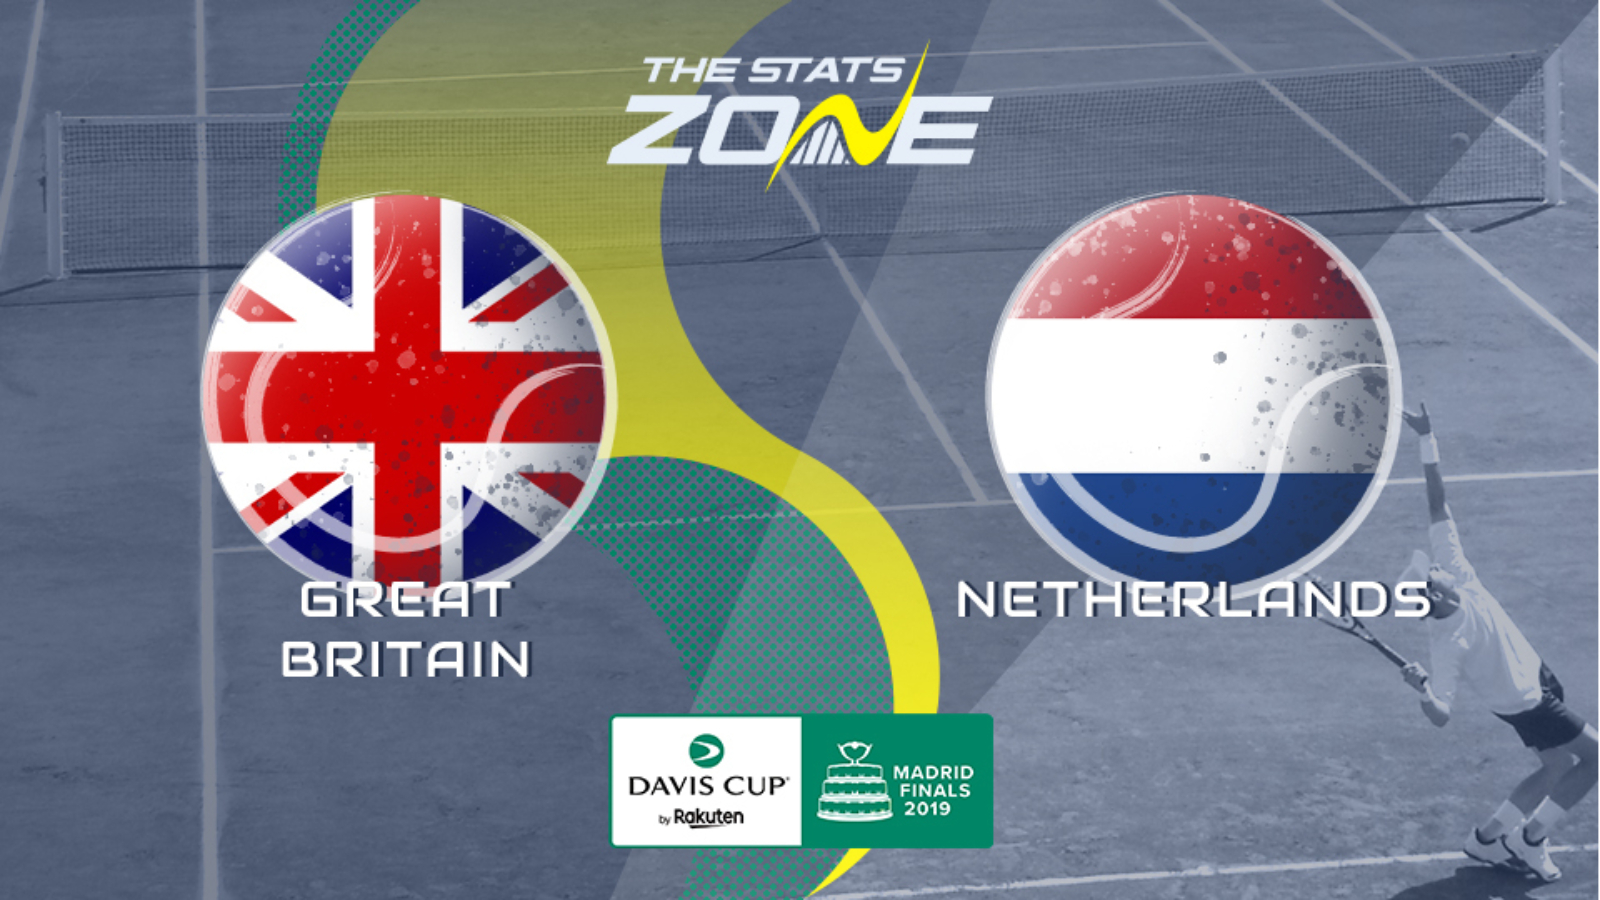 2019 Davis Cup Finals – Great Britain vs Netherlands Preview